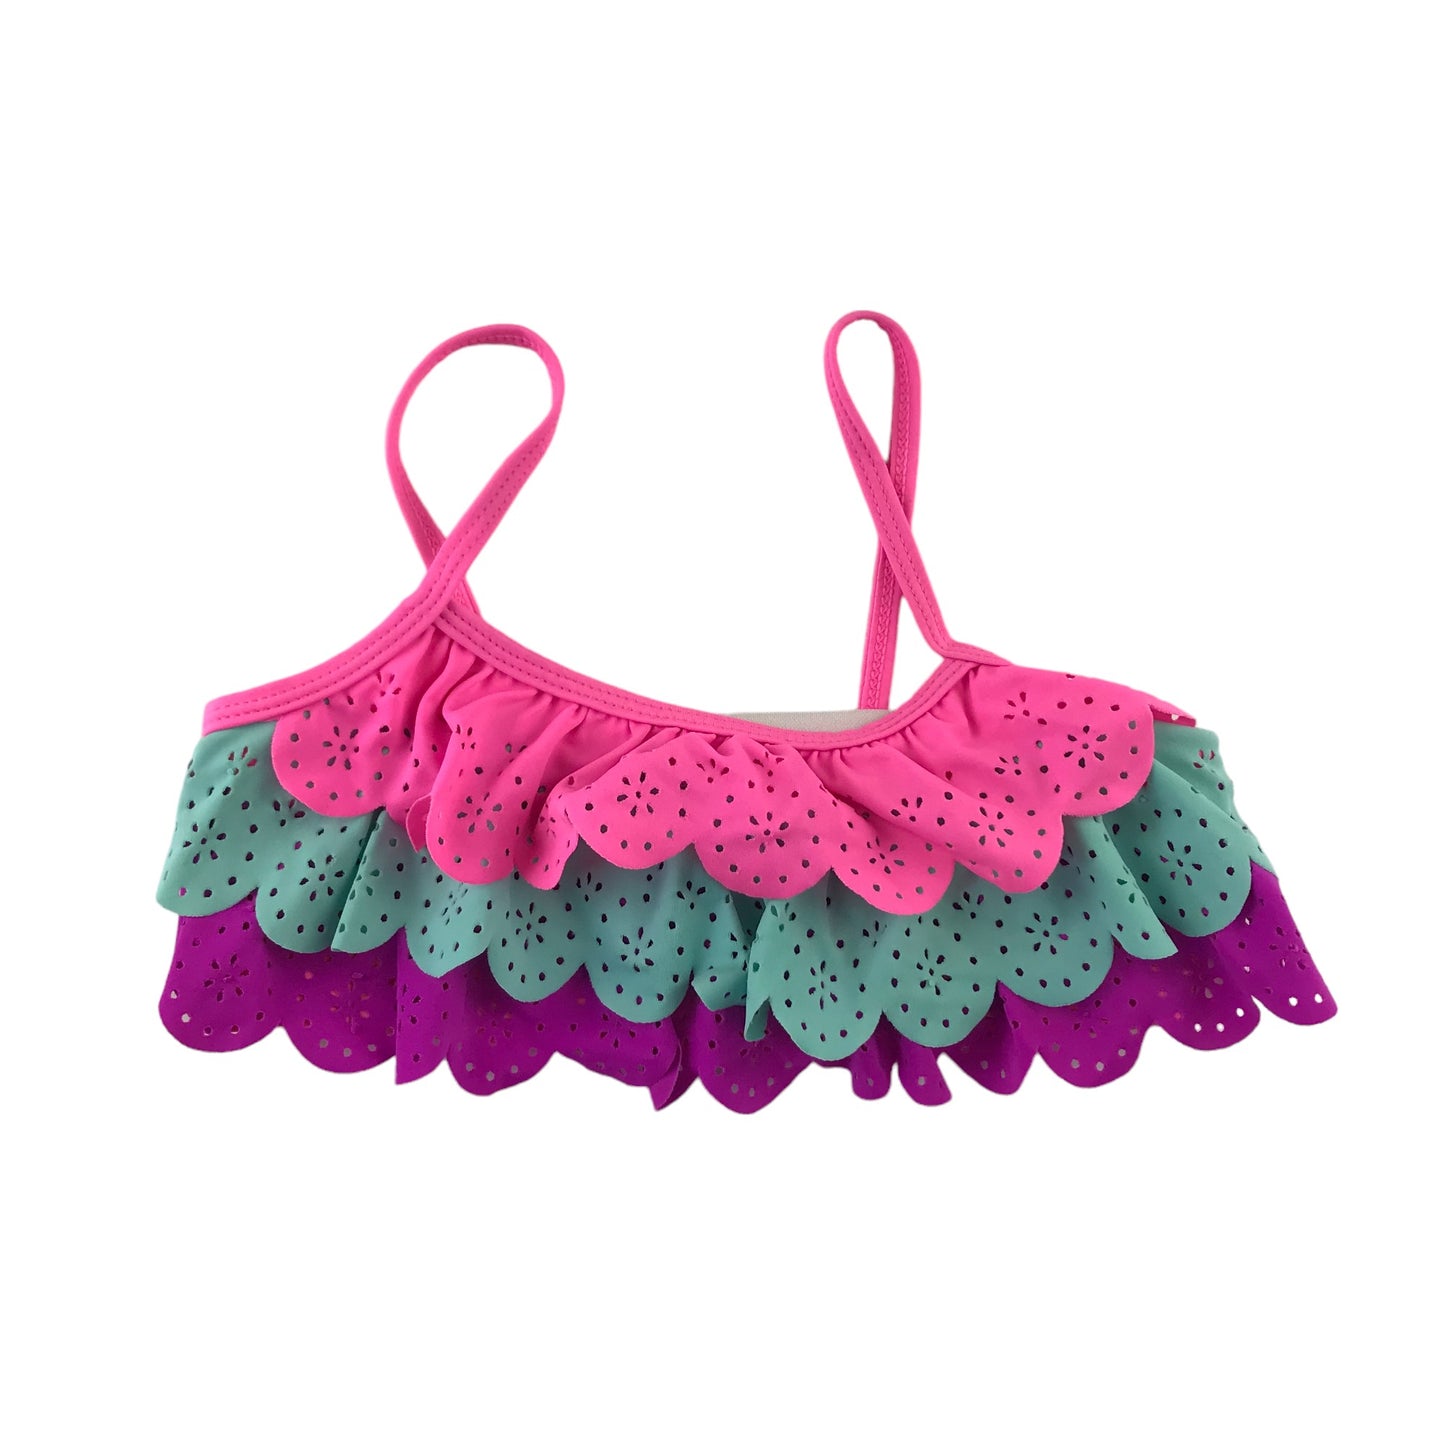 Primark Swimsuit 6-7 years pink and purple frilled bikini set